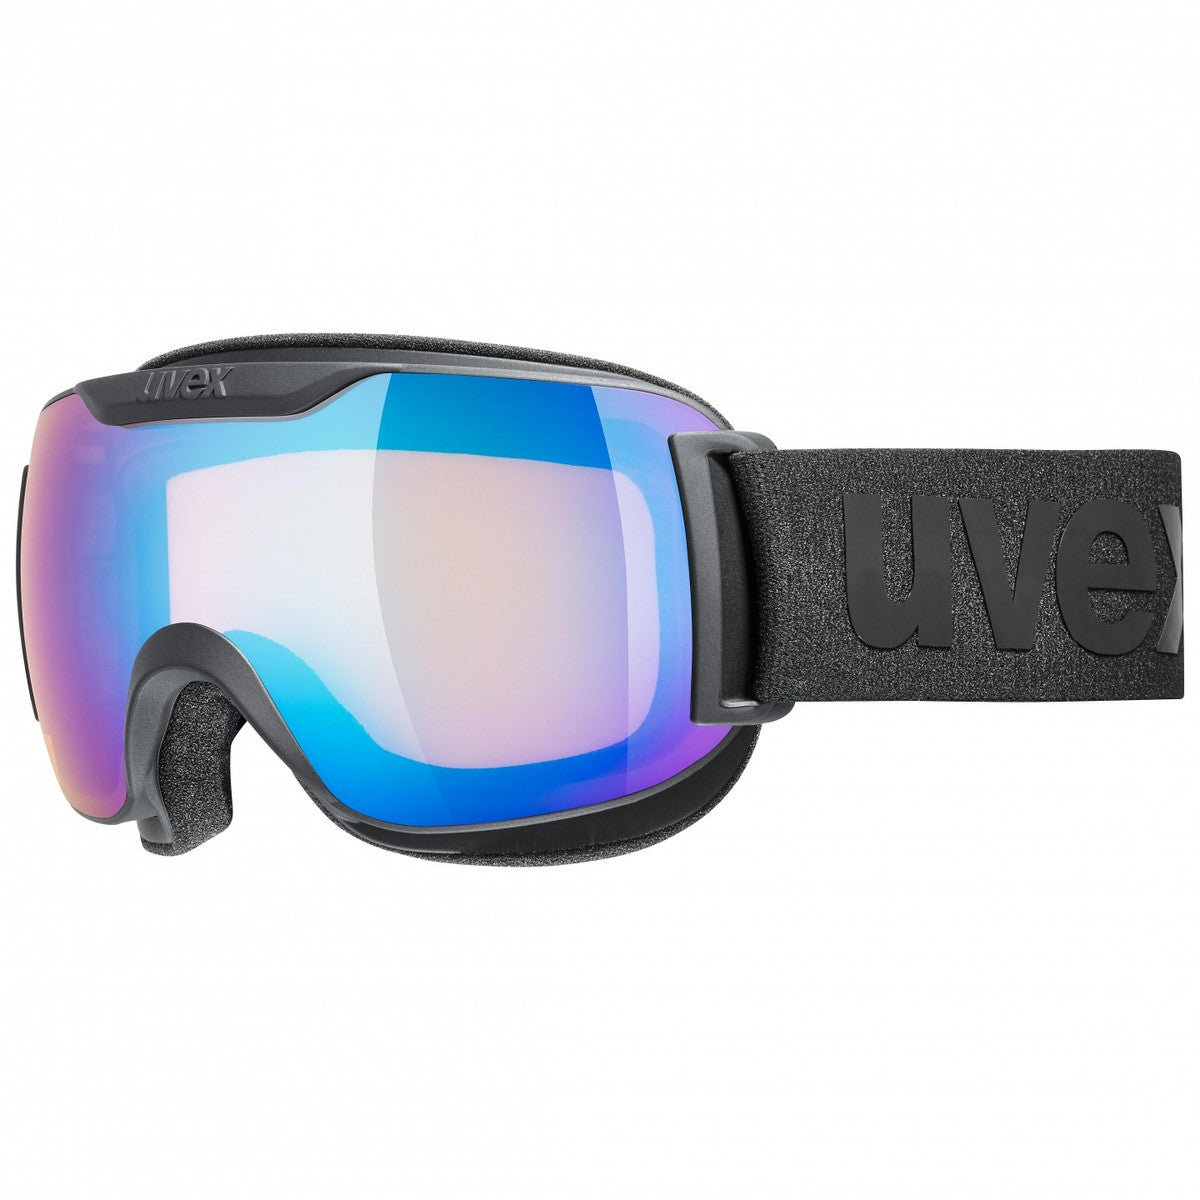 Uvex Downhill 2000 S CV skibril zwart